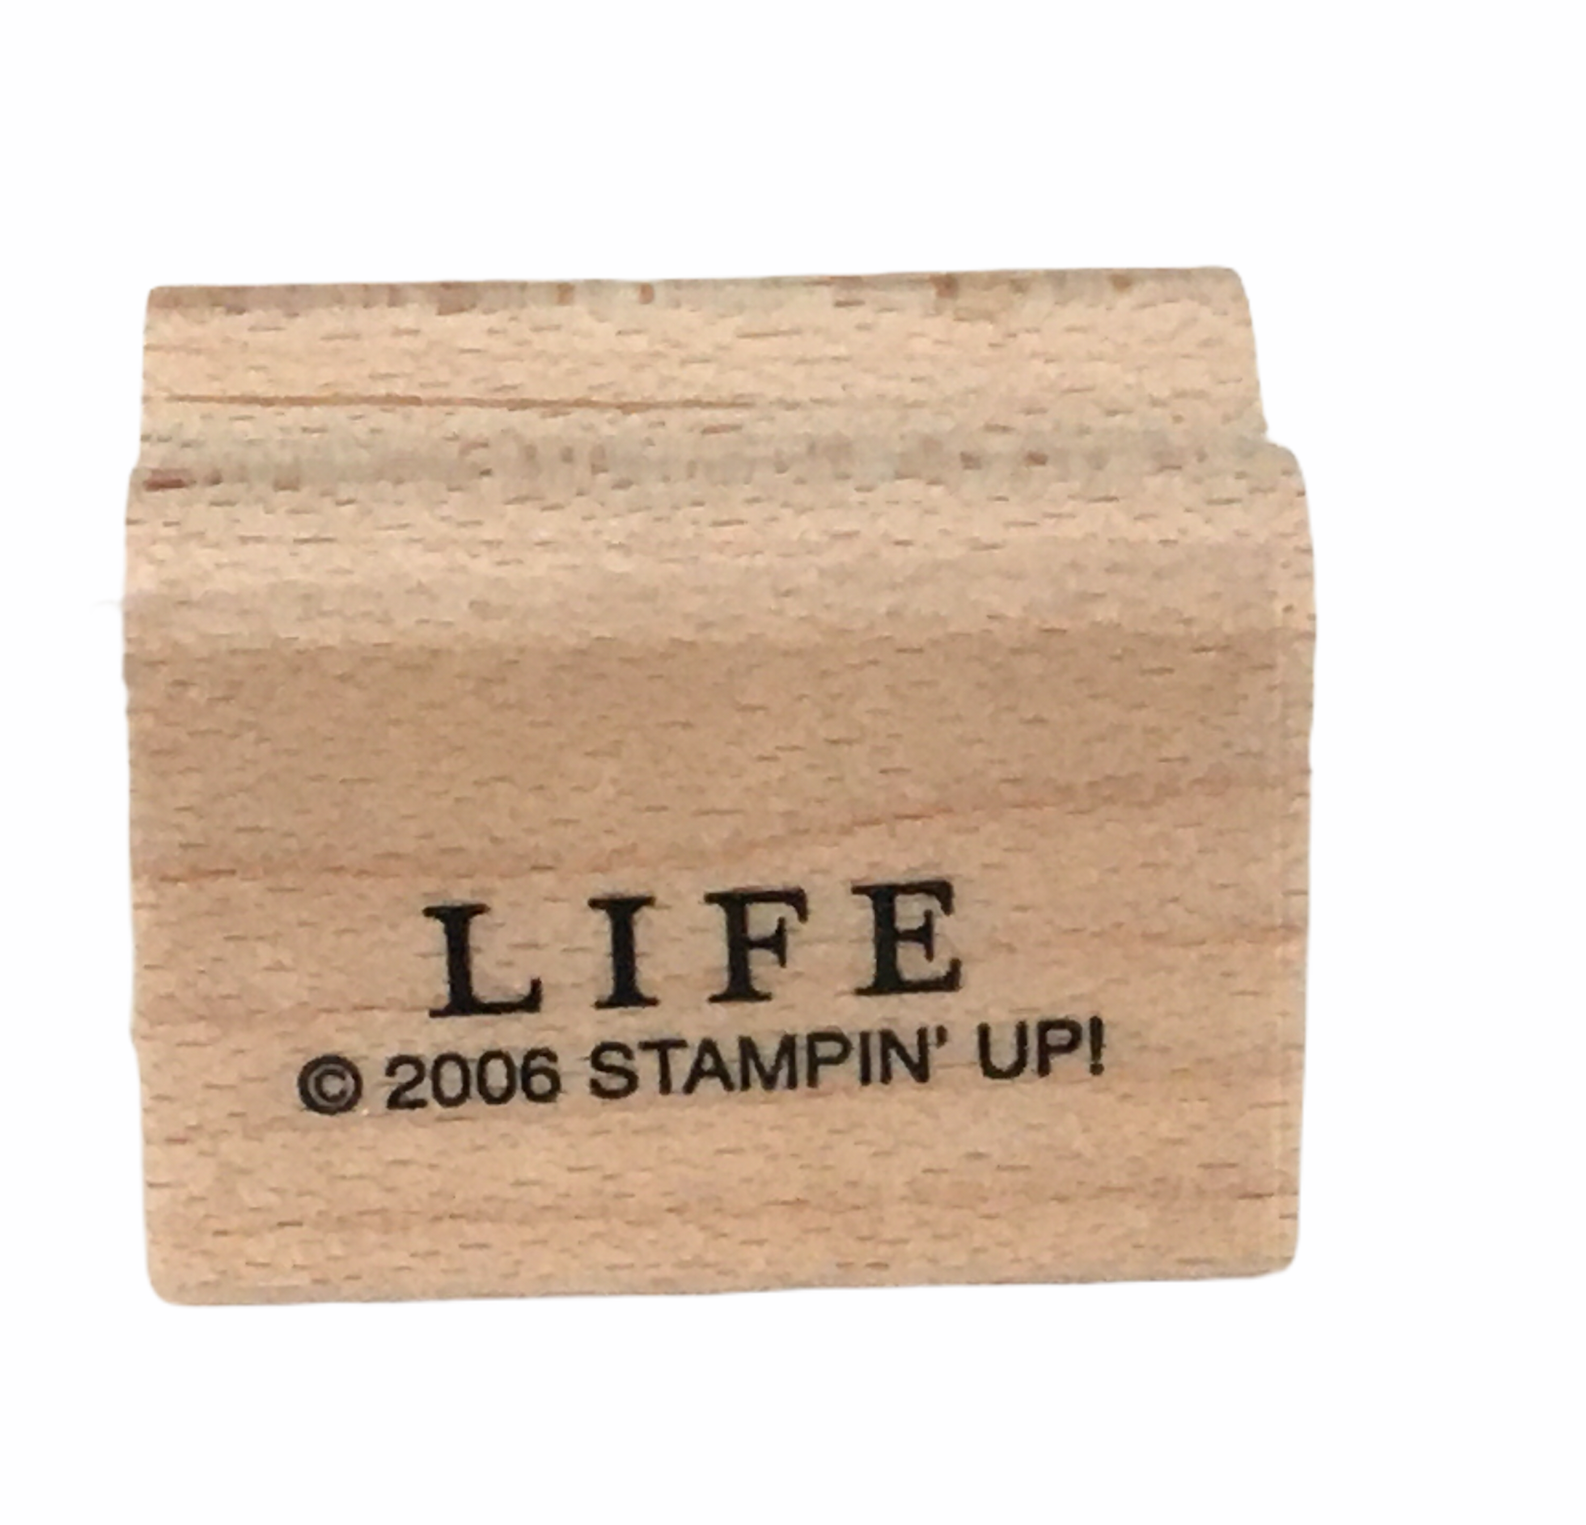 Stampin Up Stamp Word Life Card Making Craft Uplifting Sentiment Inspiration Art - $3.00